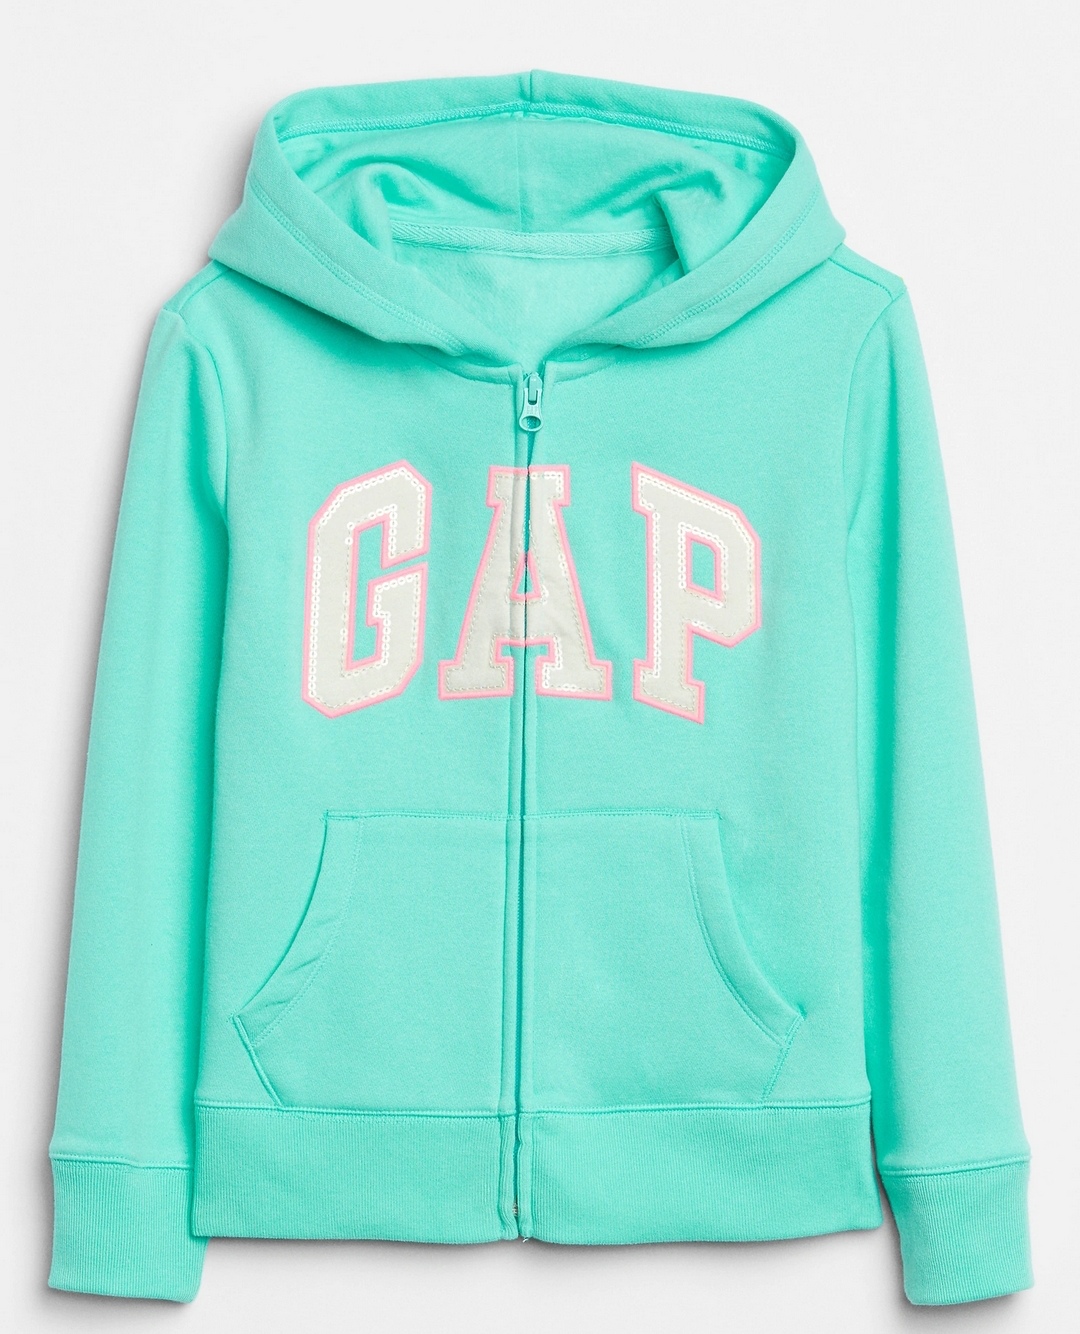 Gap Girls Fleece Hoodie – ONE Shopping Mall